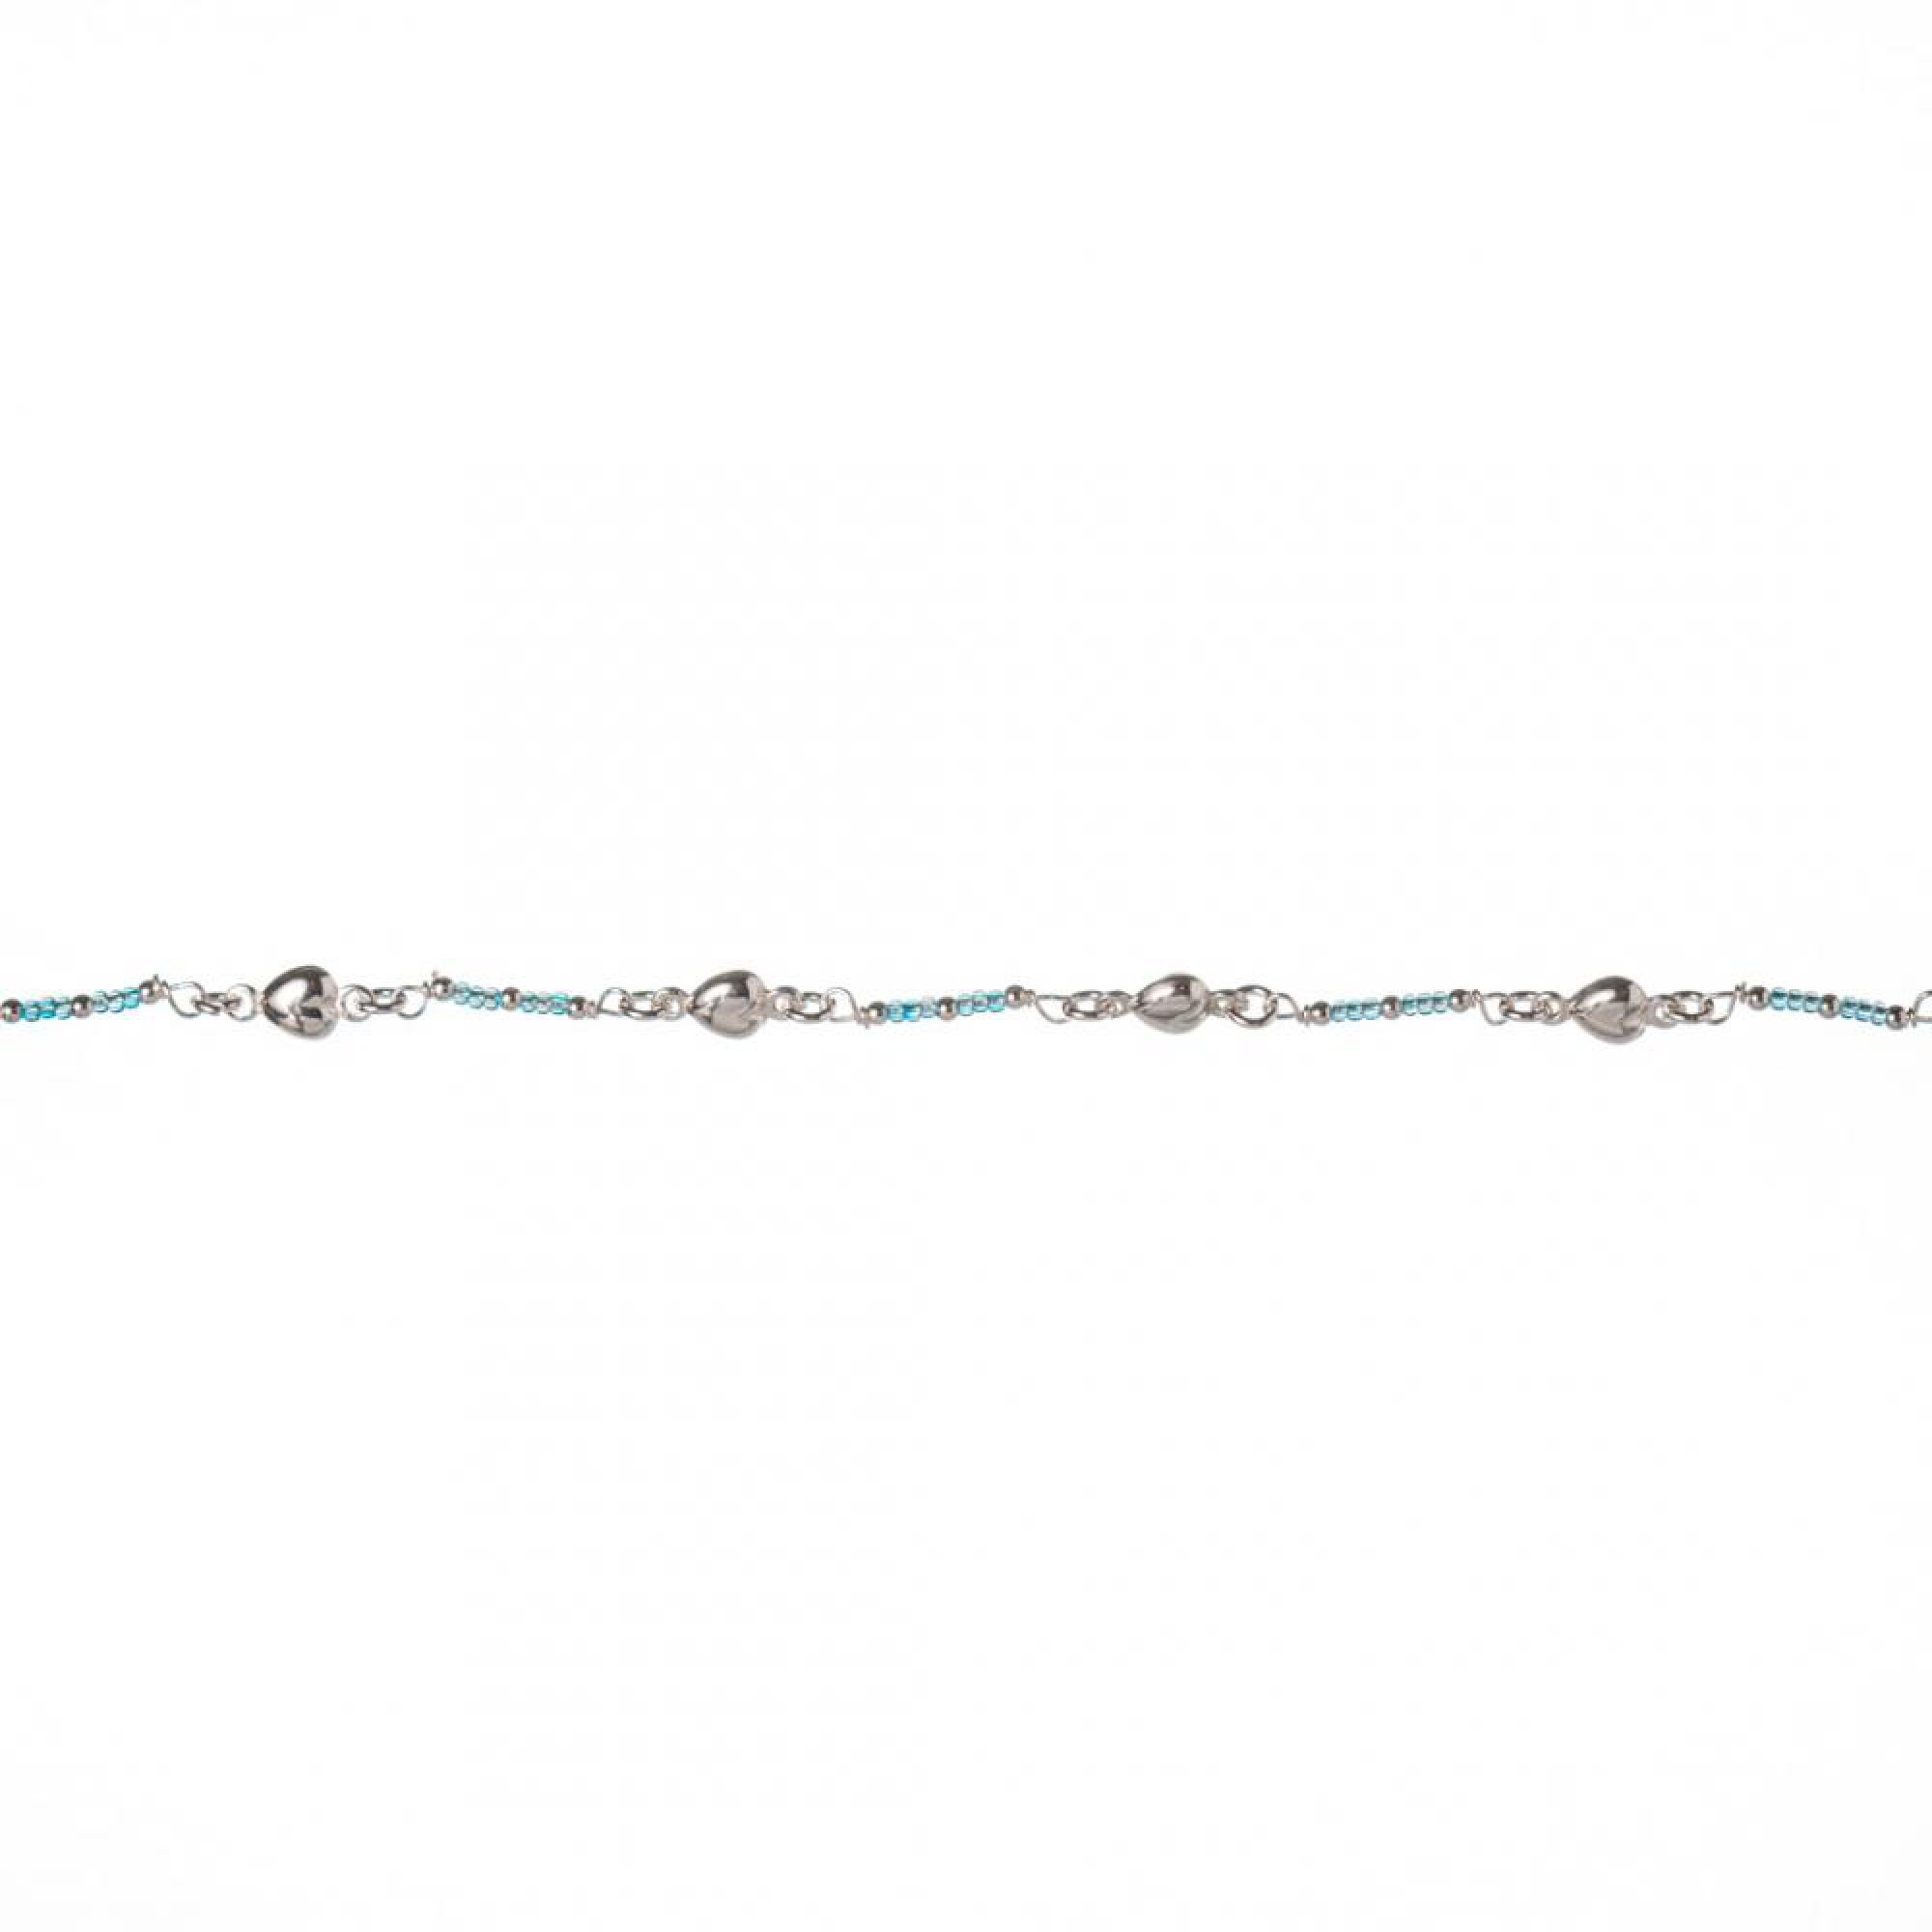 Bracelet with blue beads